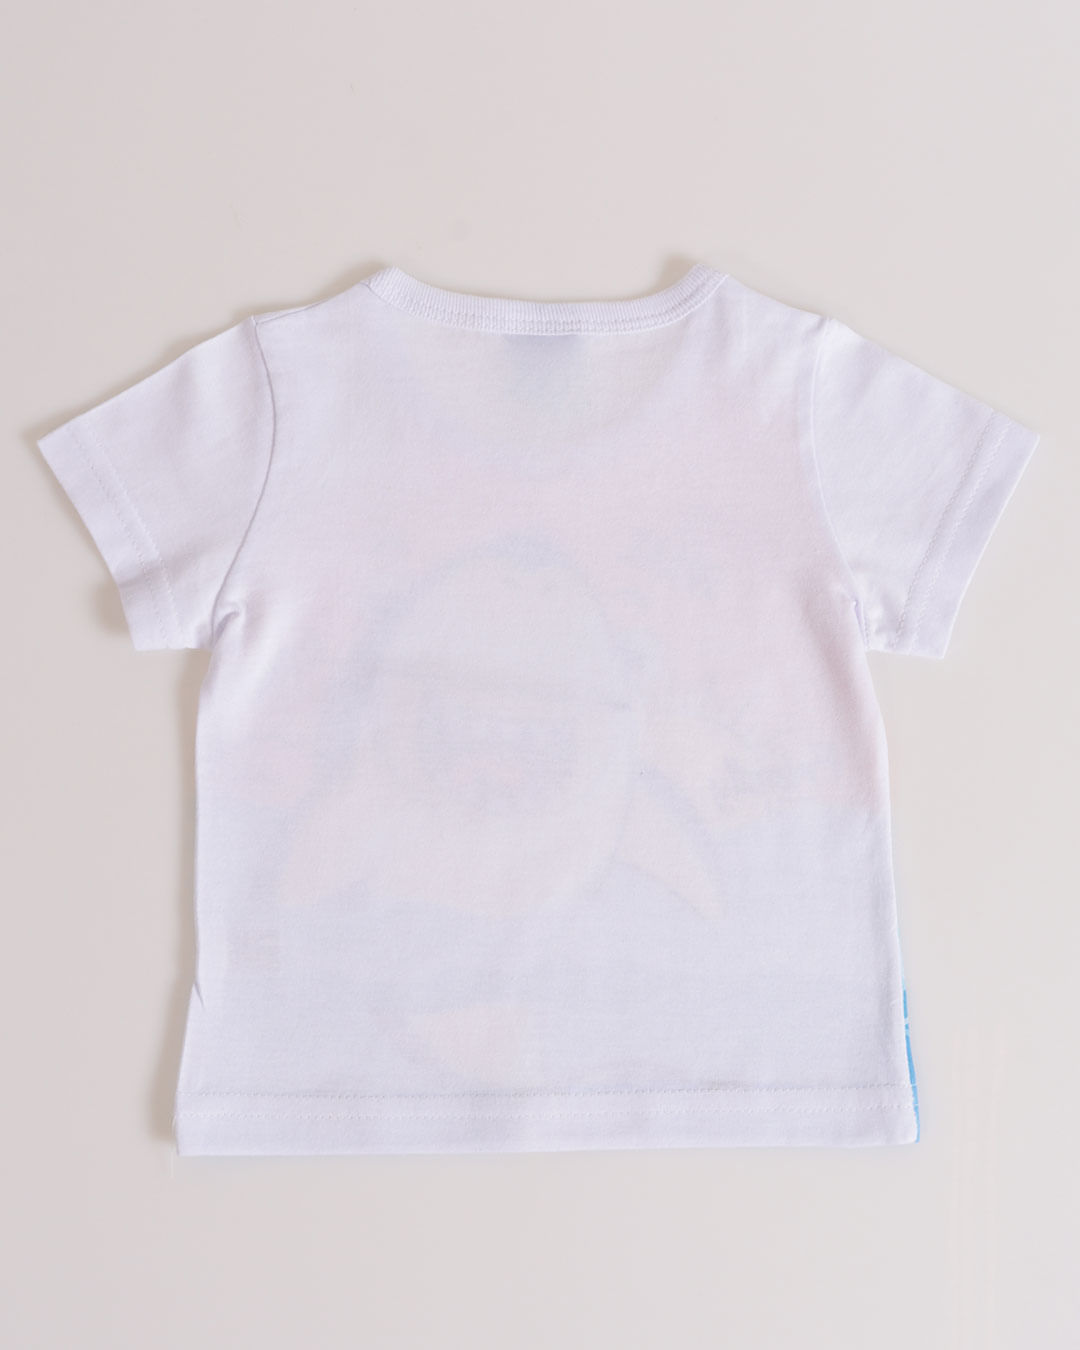 Camiseta-Mc-24358-Tubarao-Mpg---Branco